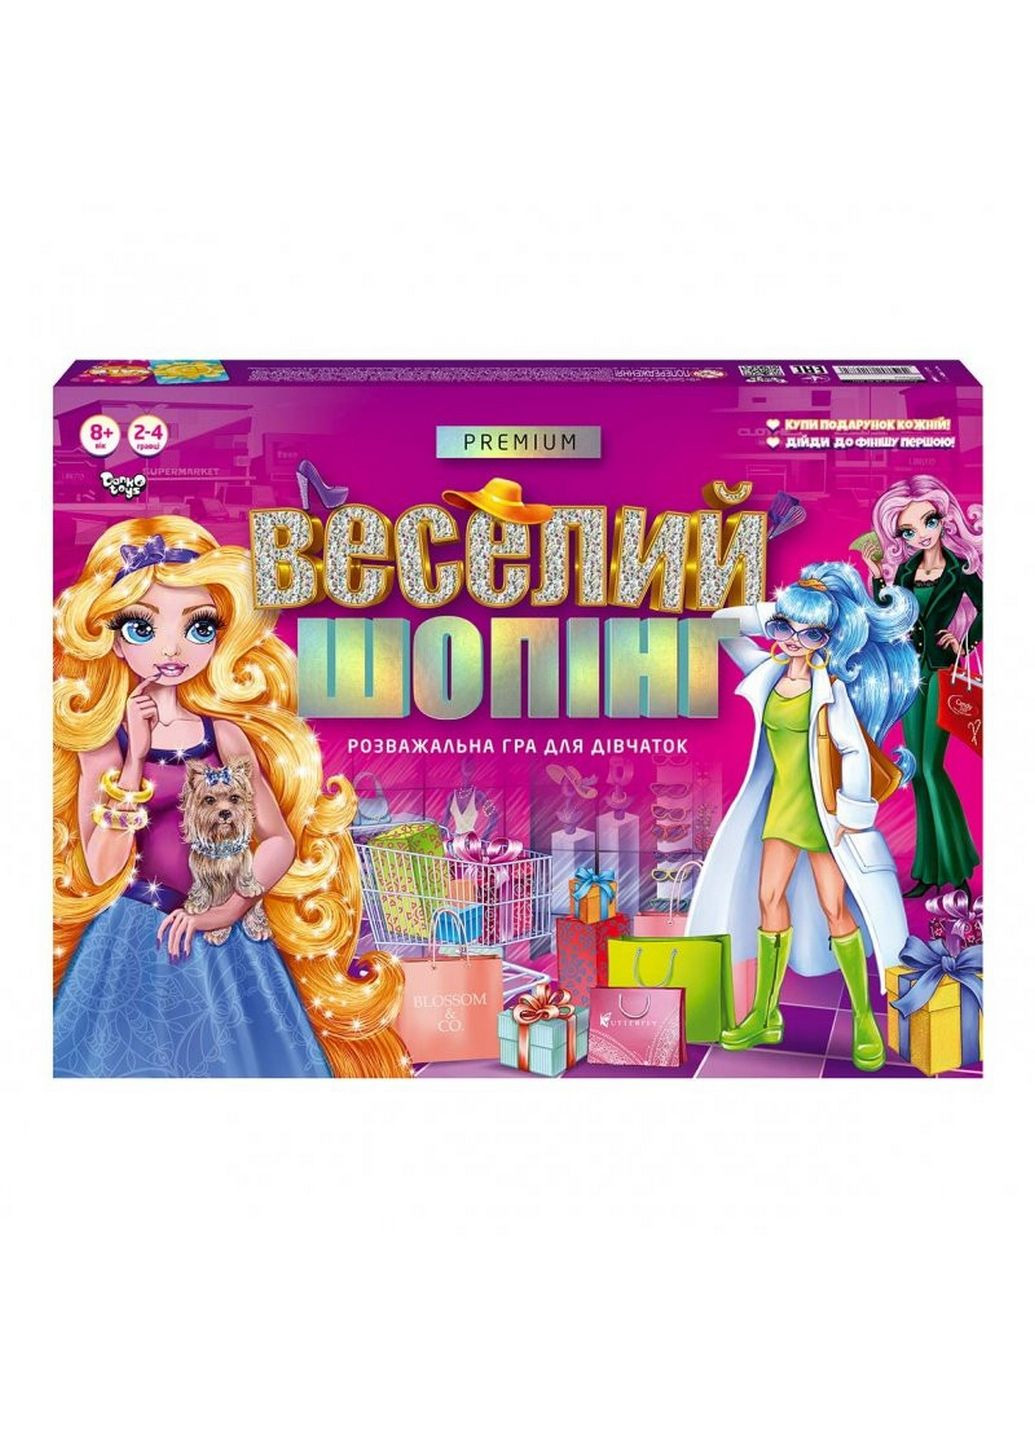 Настільна гра "Веселий шопінг Premium" рус От 6 лет Danko Toys (289364200)